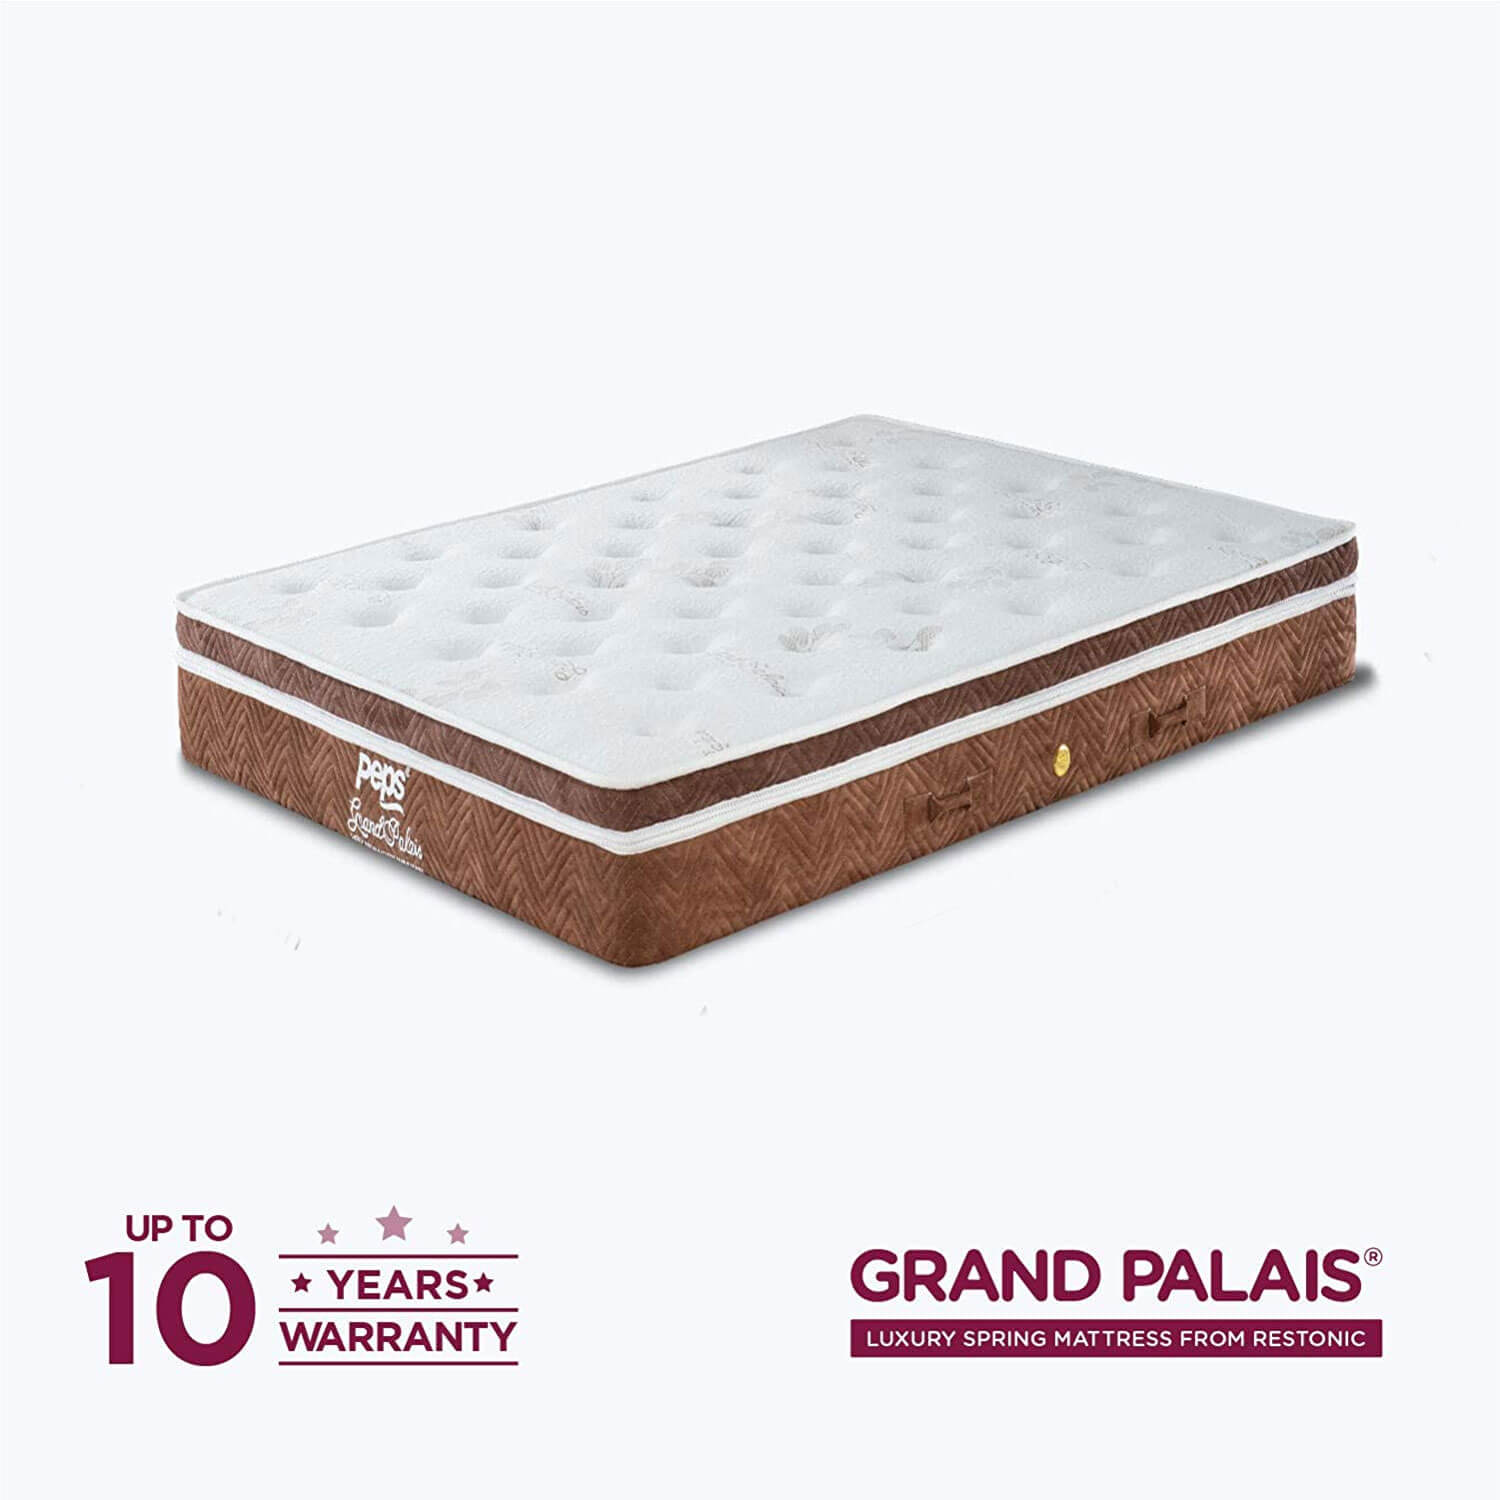 Peps Grand Palais Ultra Premium Luxury Memory foam Spring Mattress